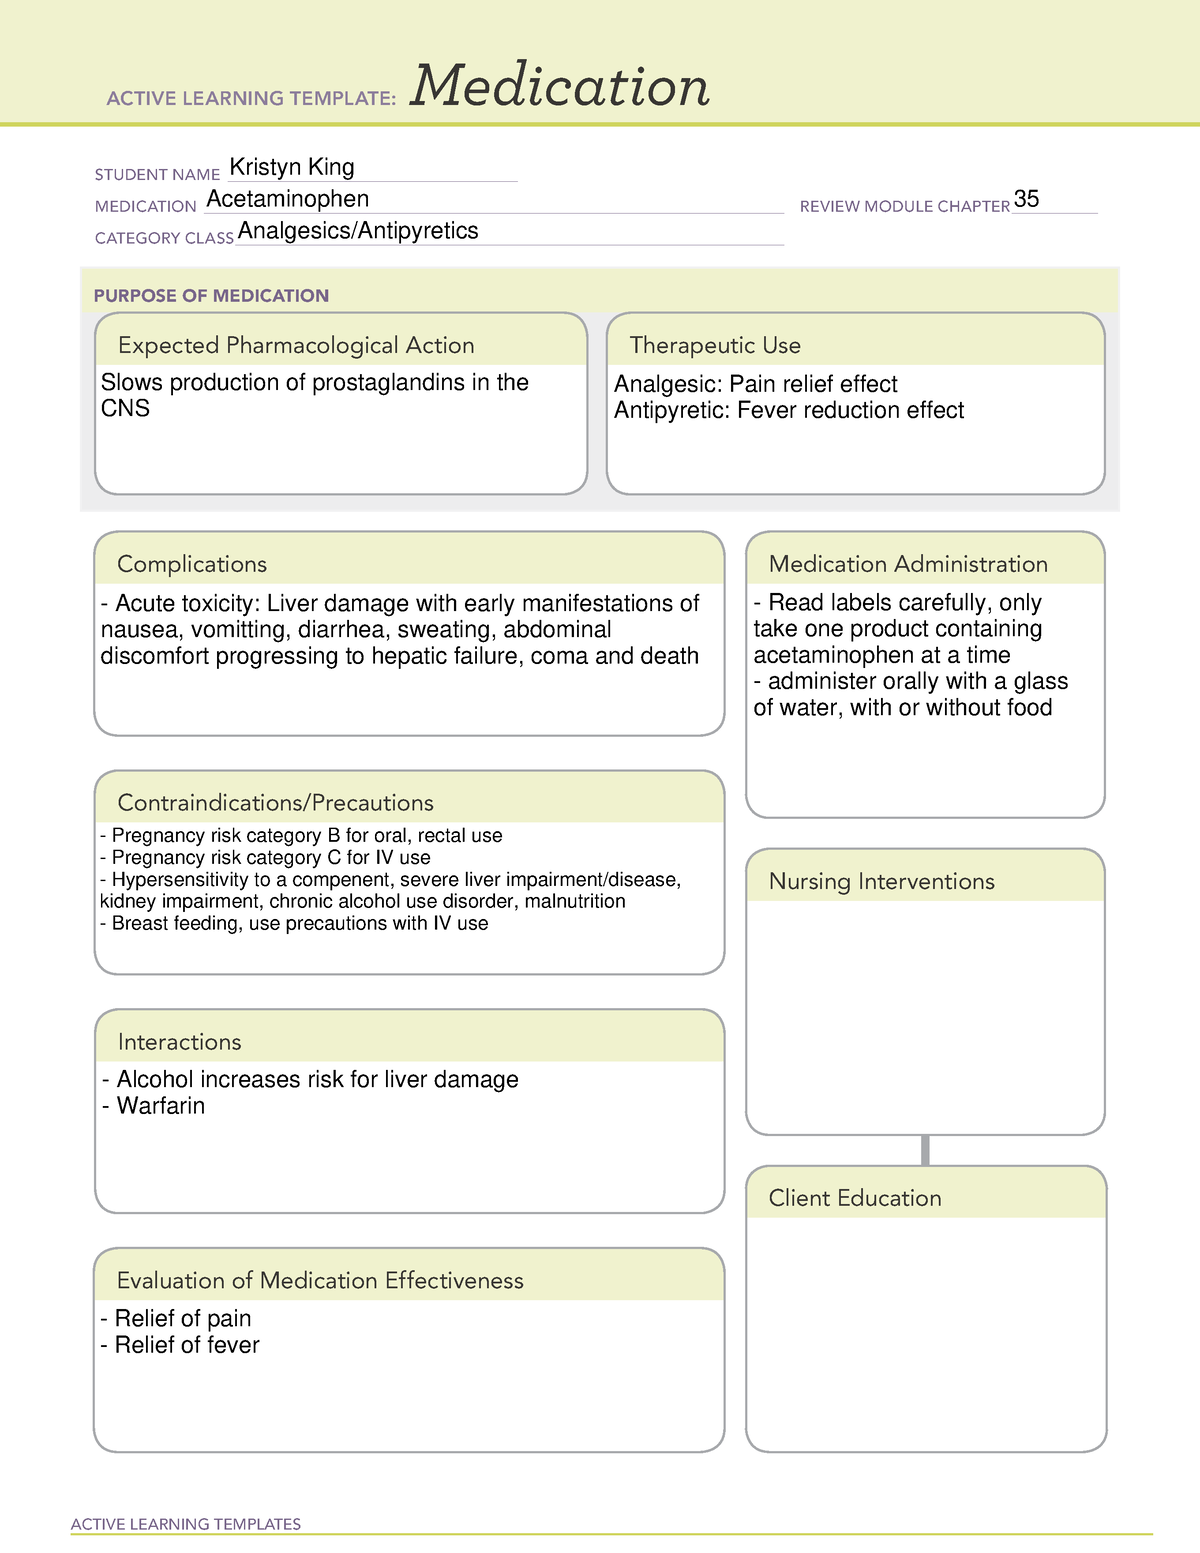 Acetaminophen ATI Med Sheet ACTIVE LEARNING TEMPLATES Medication